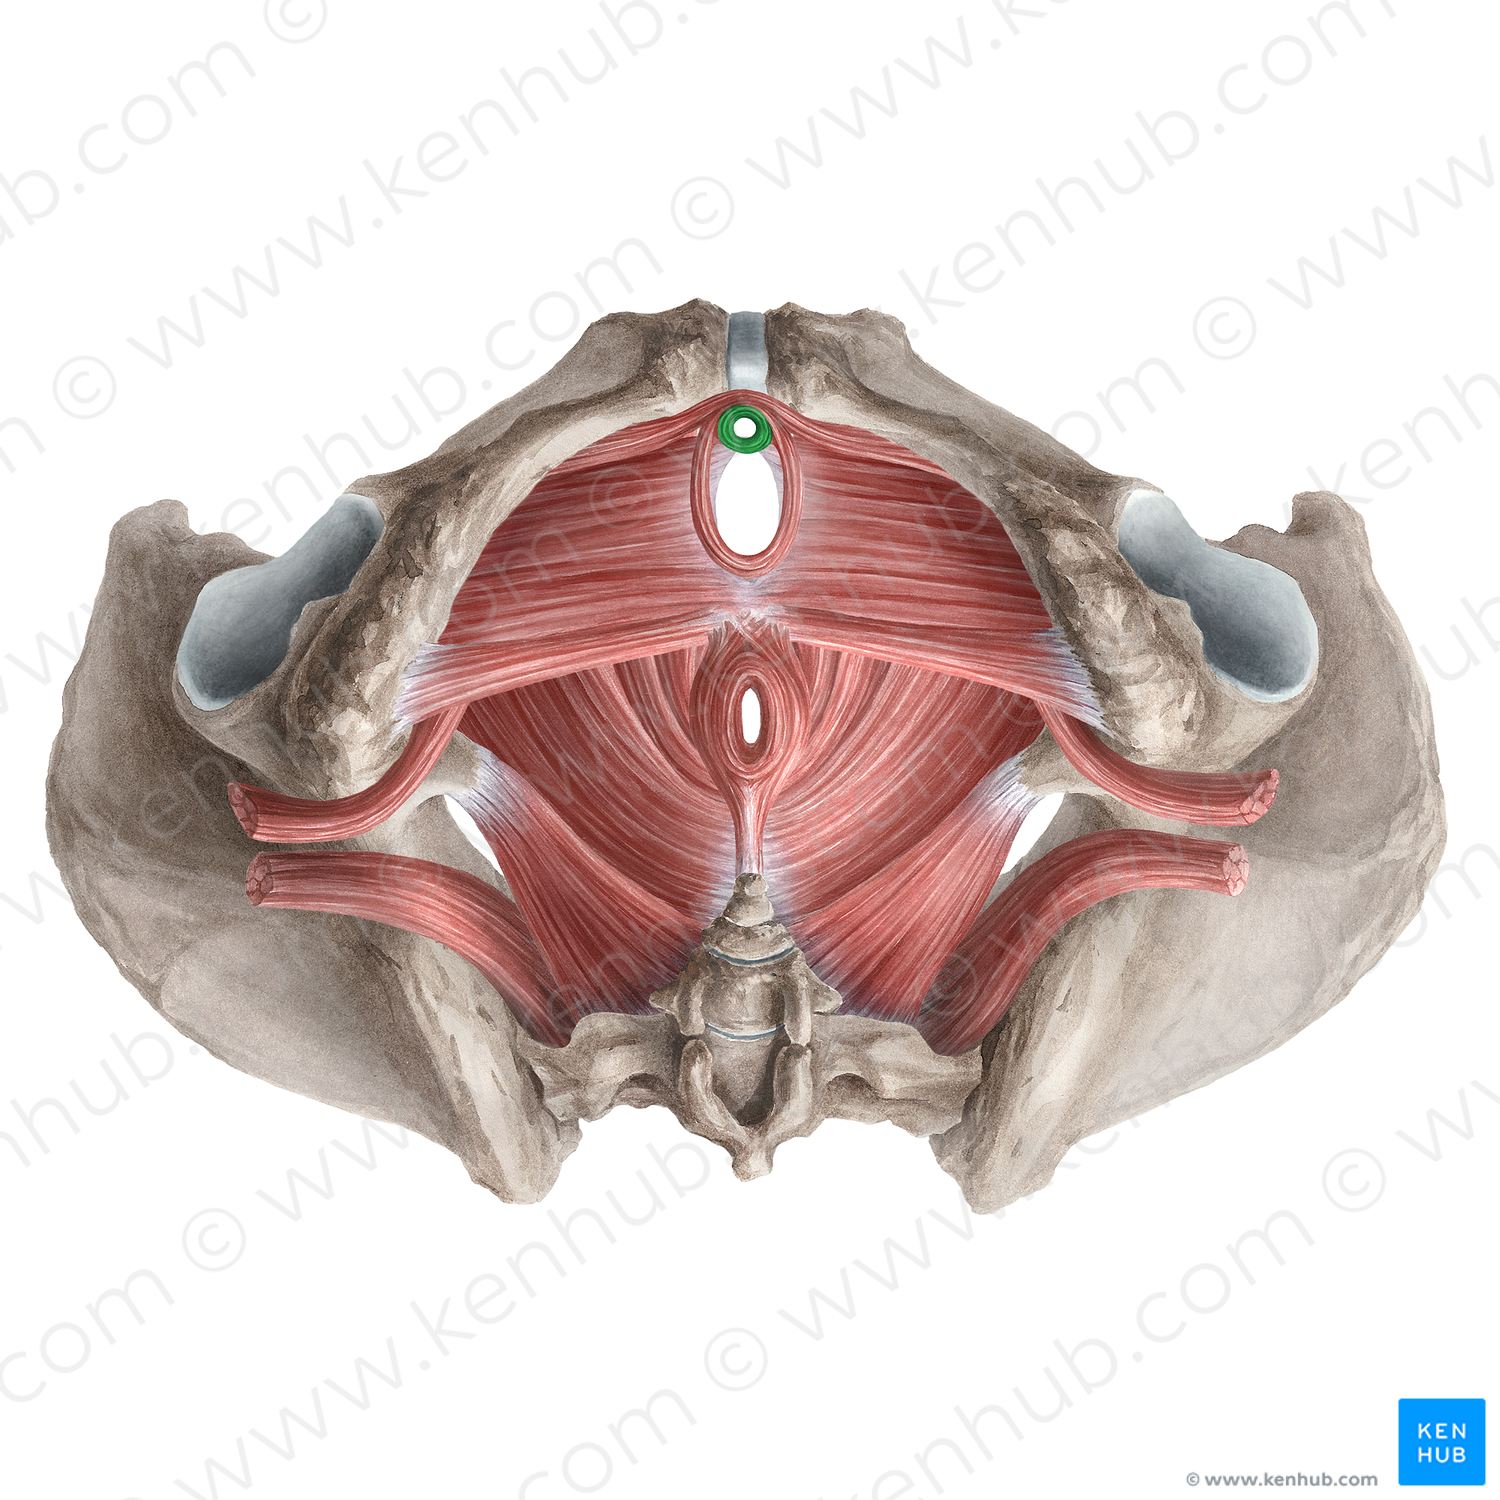 Female external urethral sphincter (proper) (#21283)